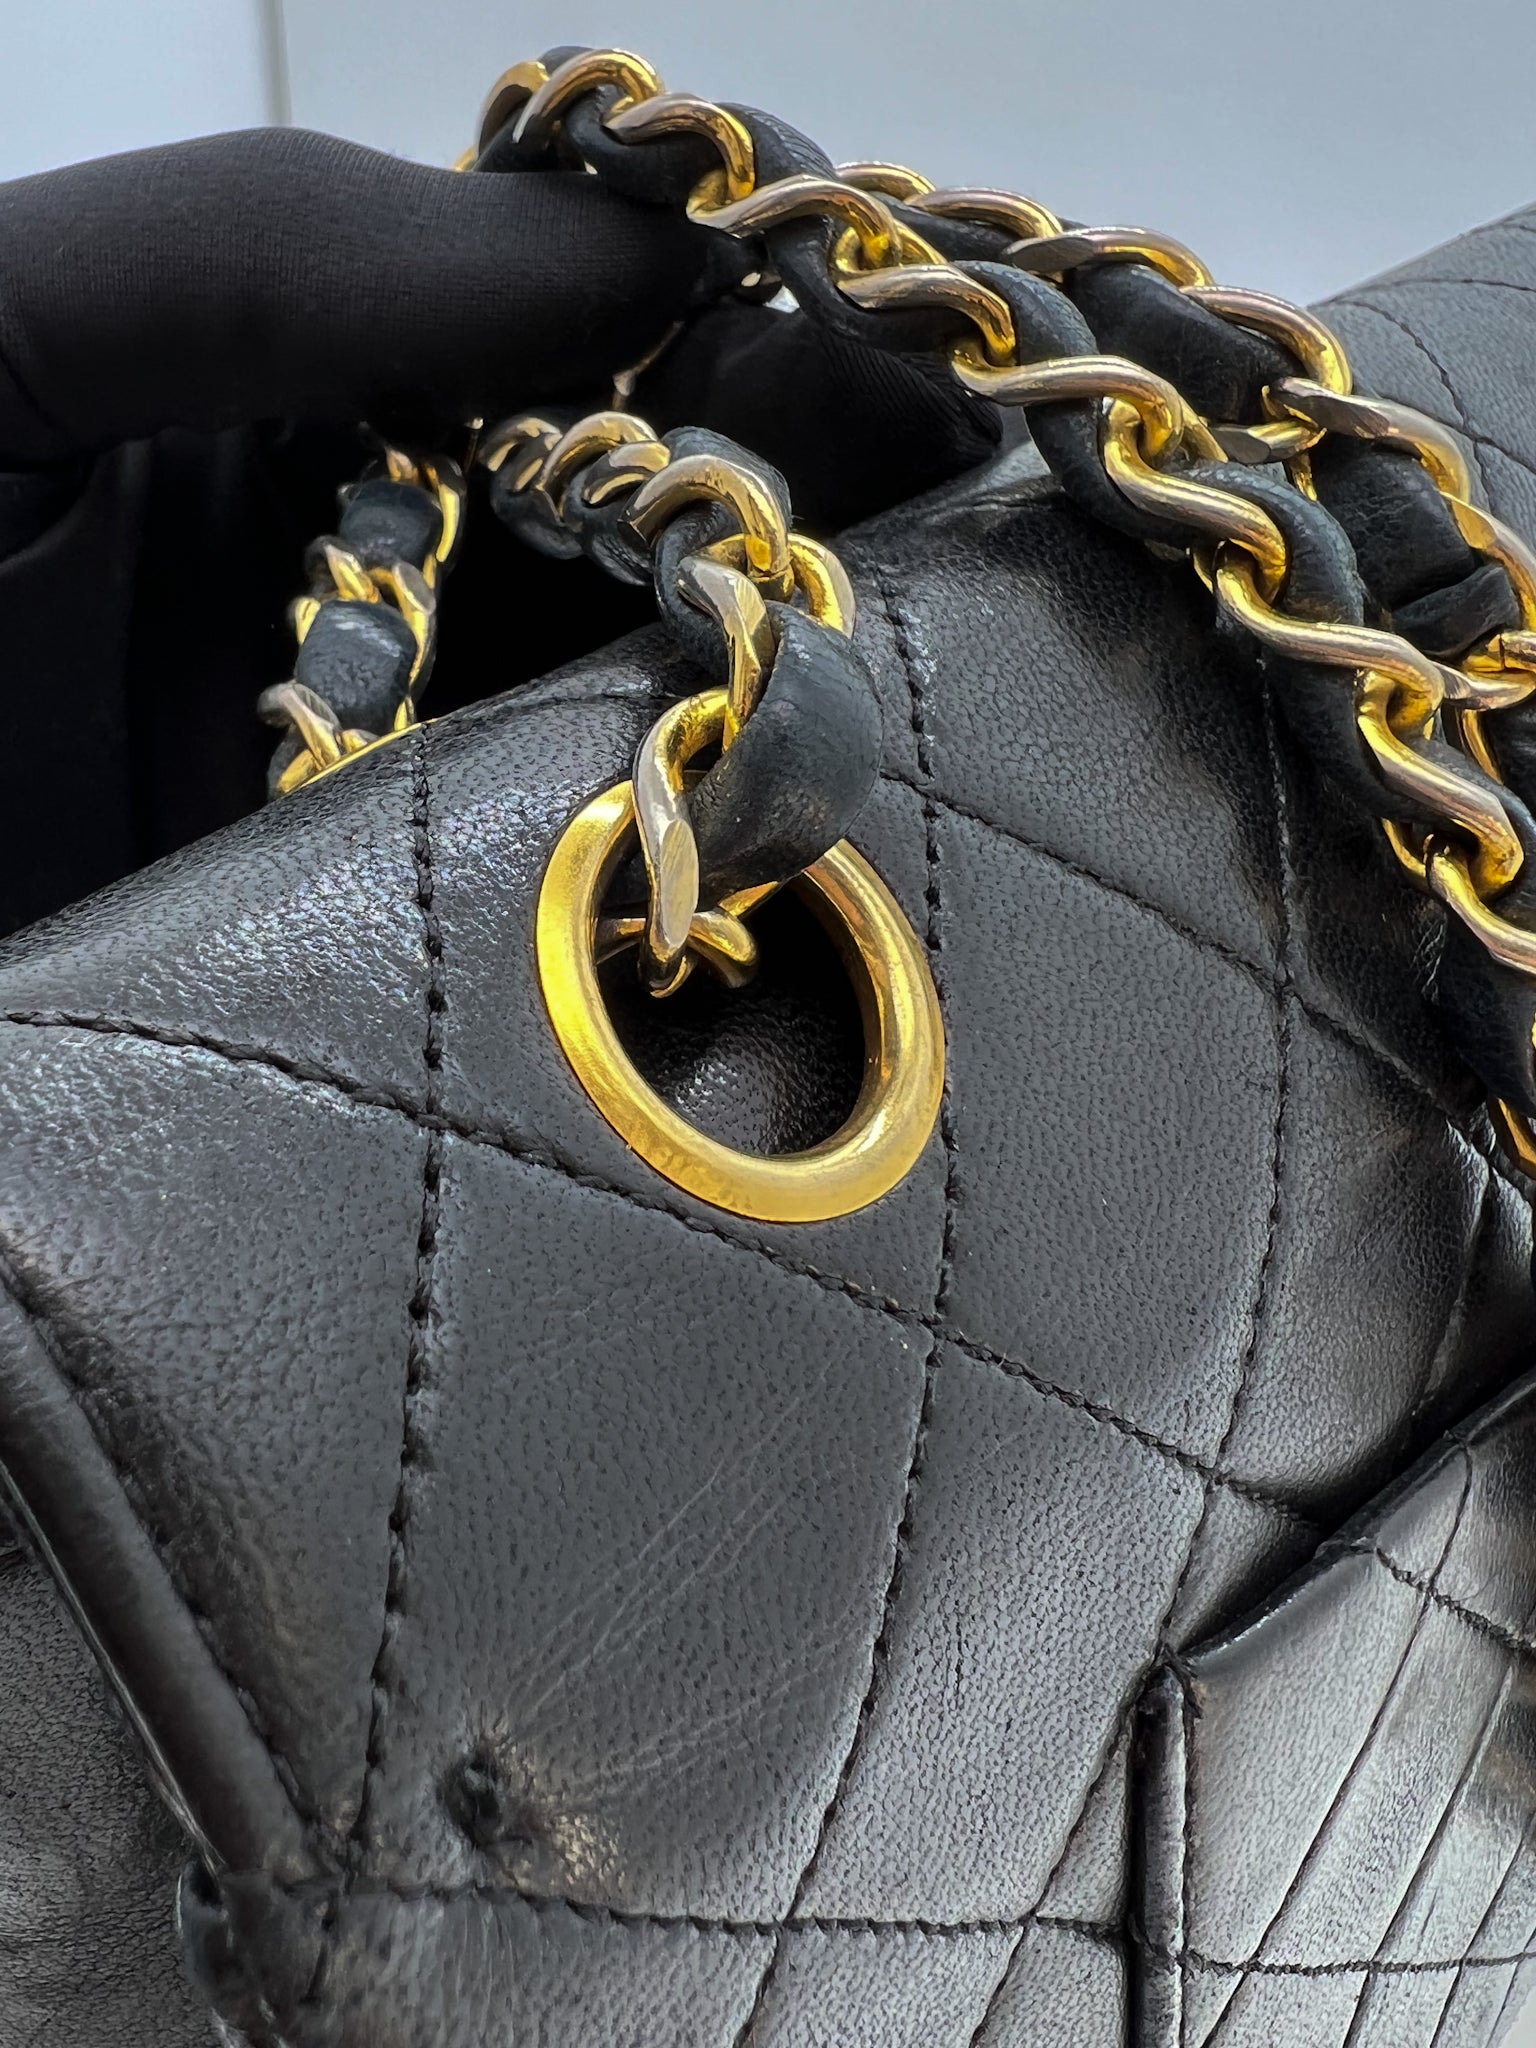 CHANEL Classic Flap Shoulder Bag Black Bags & Handbags for Women